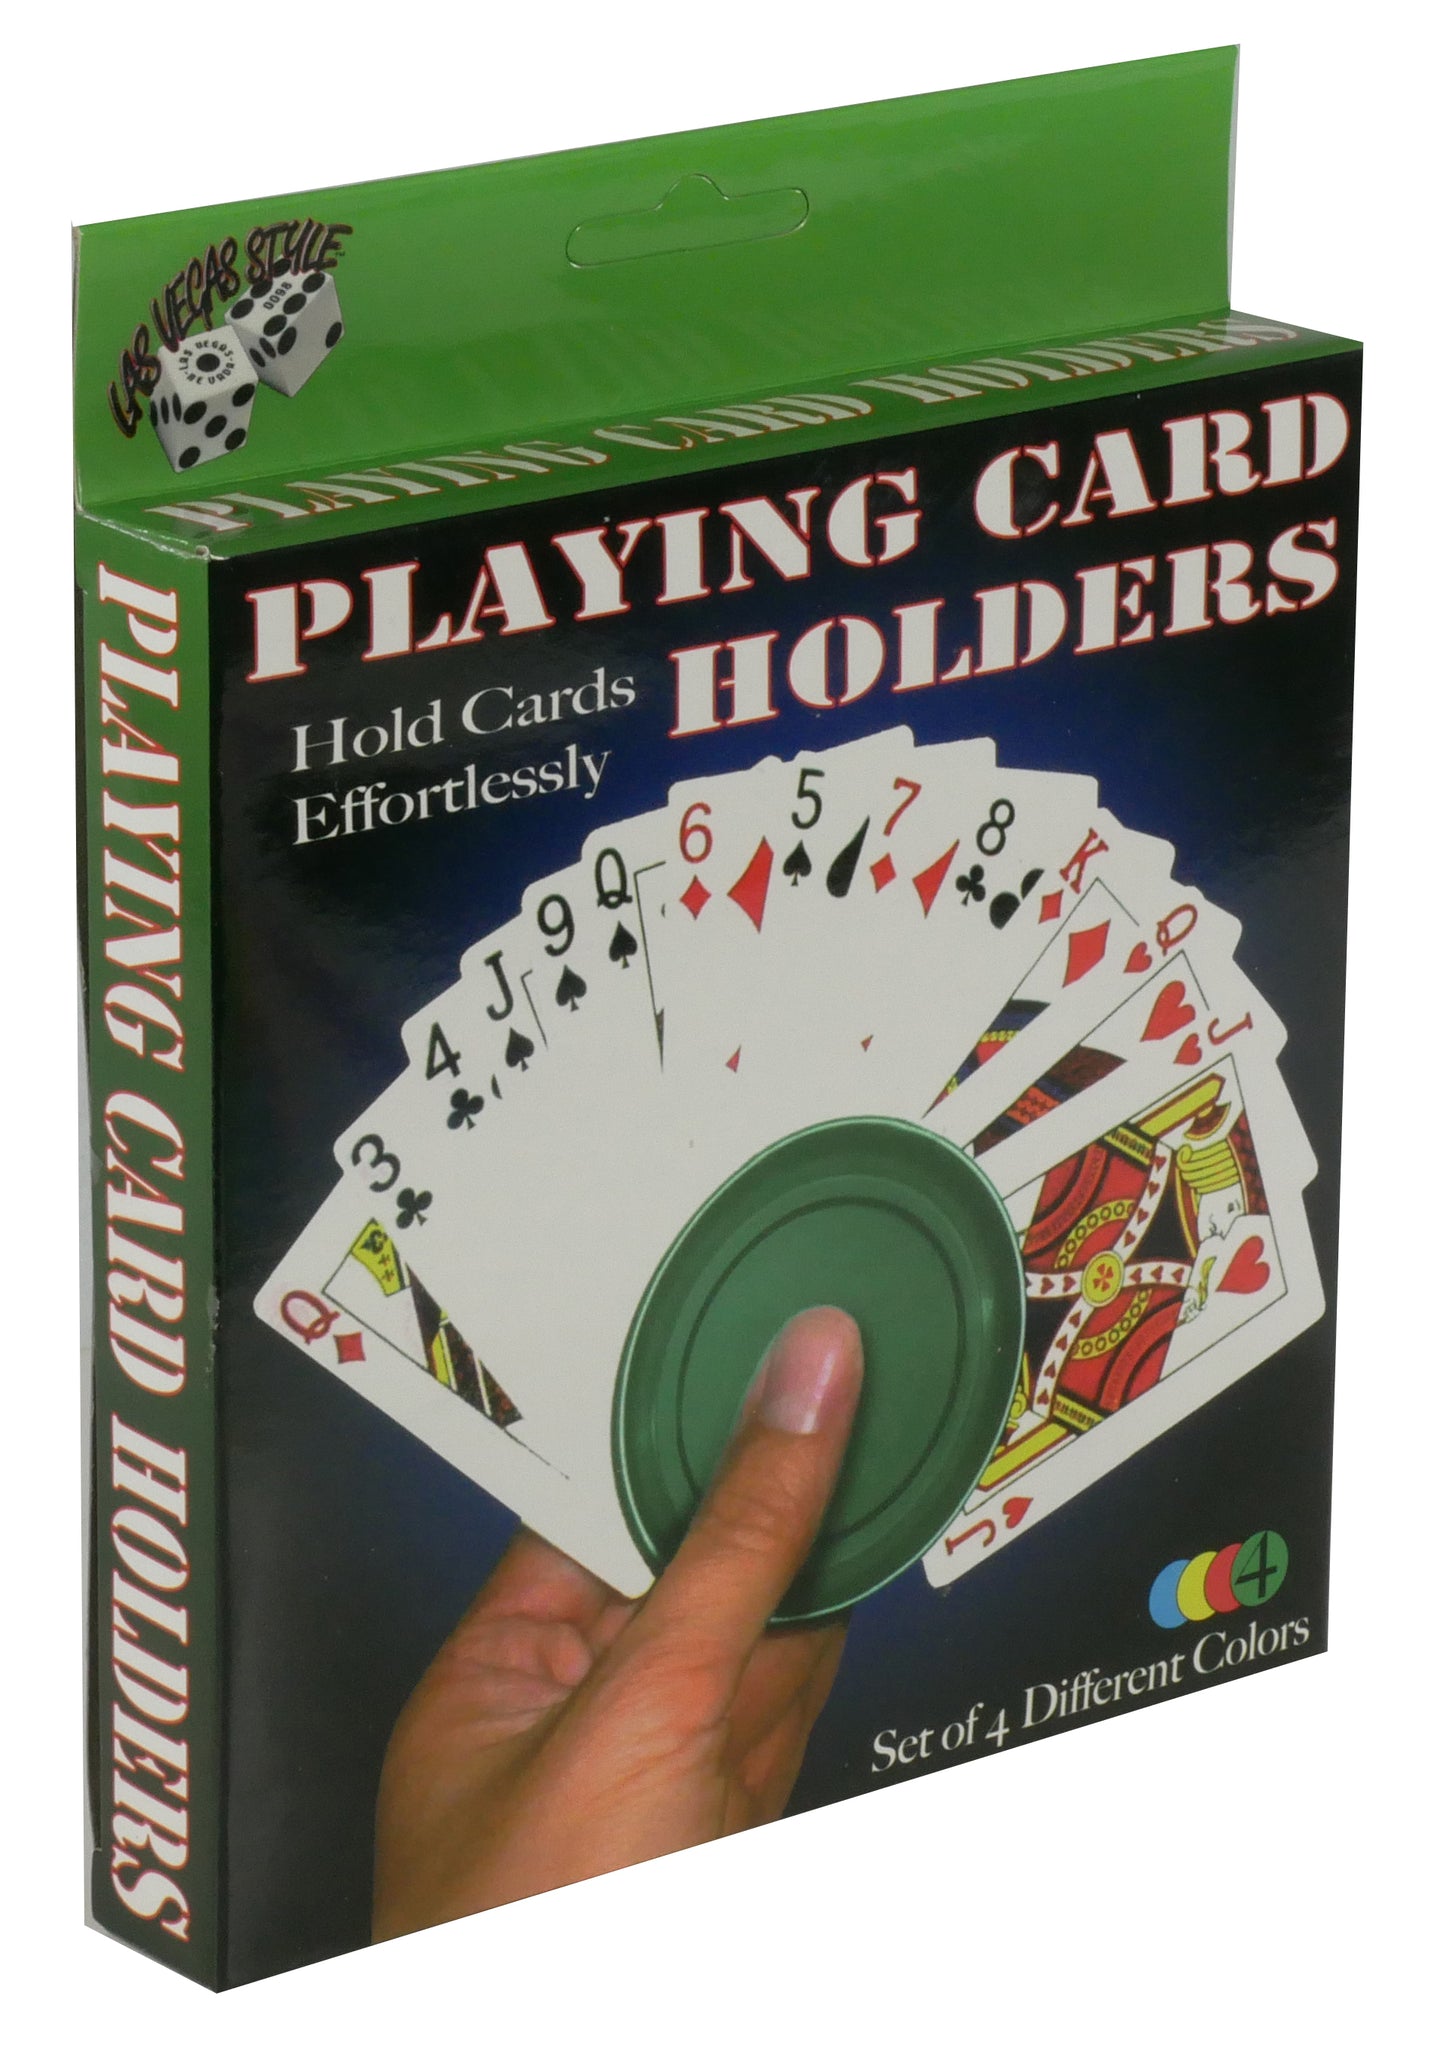 Casino- Playing Card Holder - Set of 4